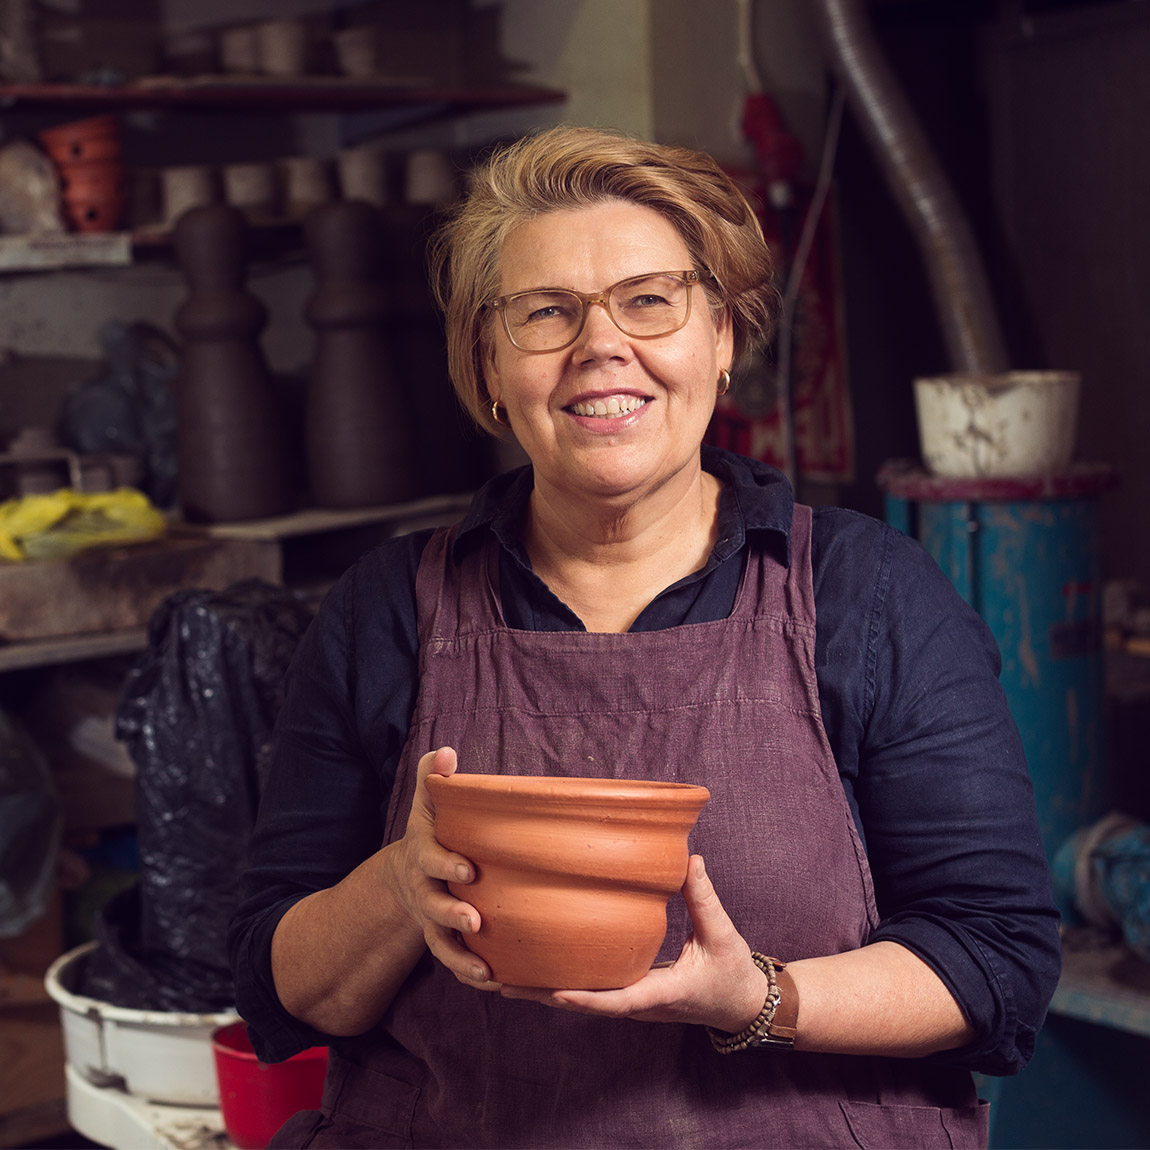 Udumbara Studio & Showroom: Ceramic art rooted in Finnish soil